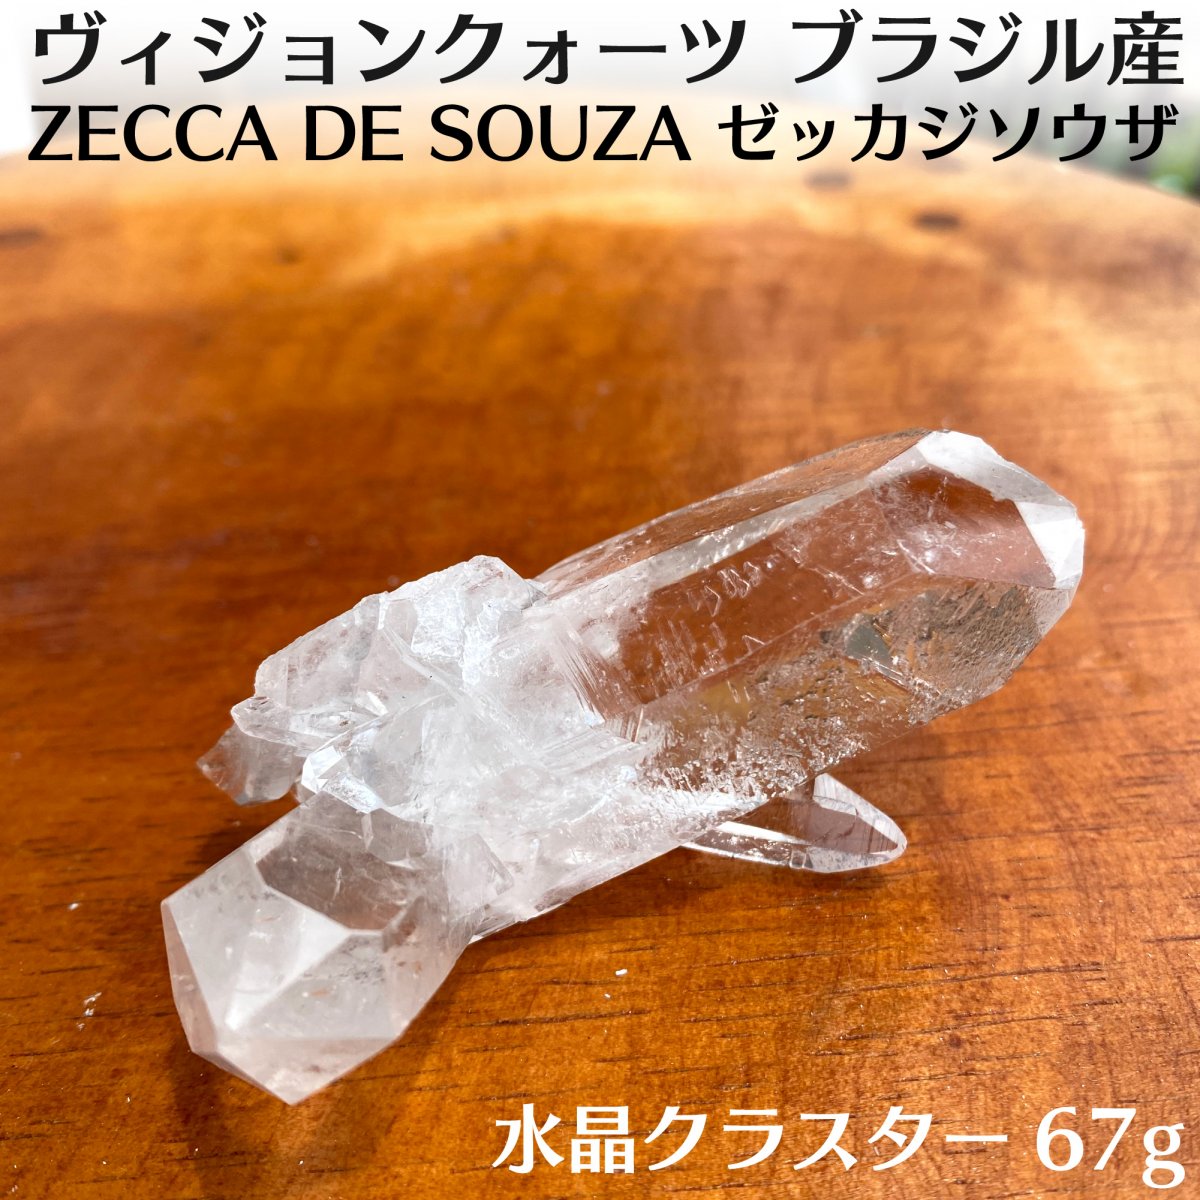 【10%OFF】ヴィジョンクォーツ 水晶 ミニクラスター(67g)/ZECA DE SOUZA(ゼッカ・ジ・ソウザ産)